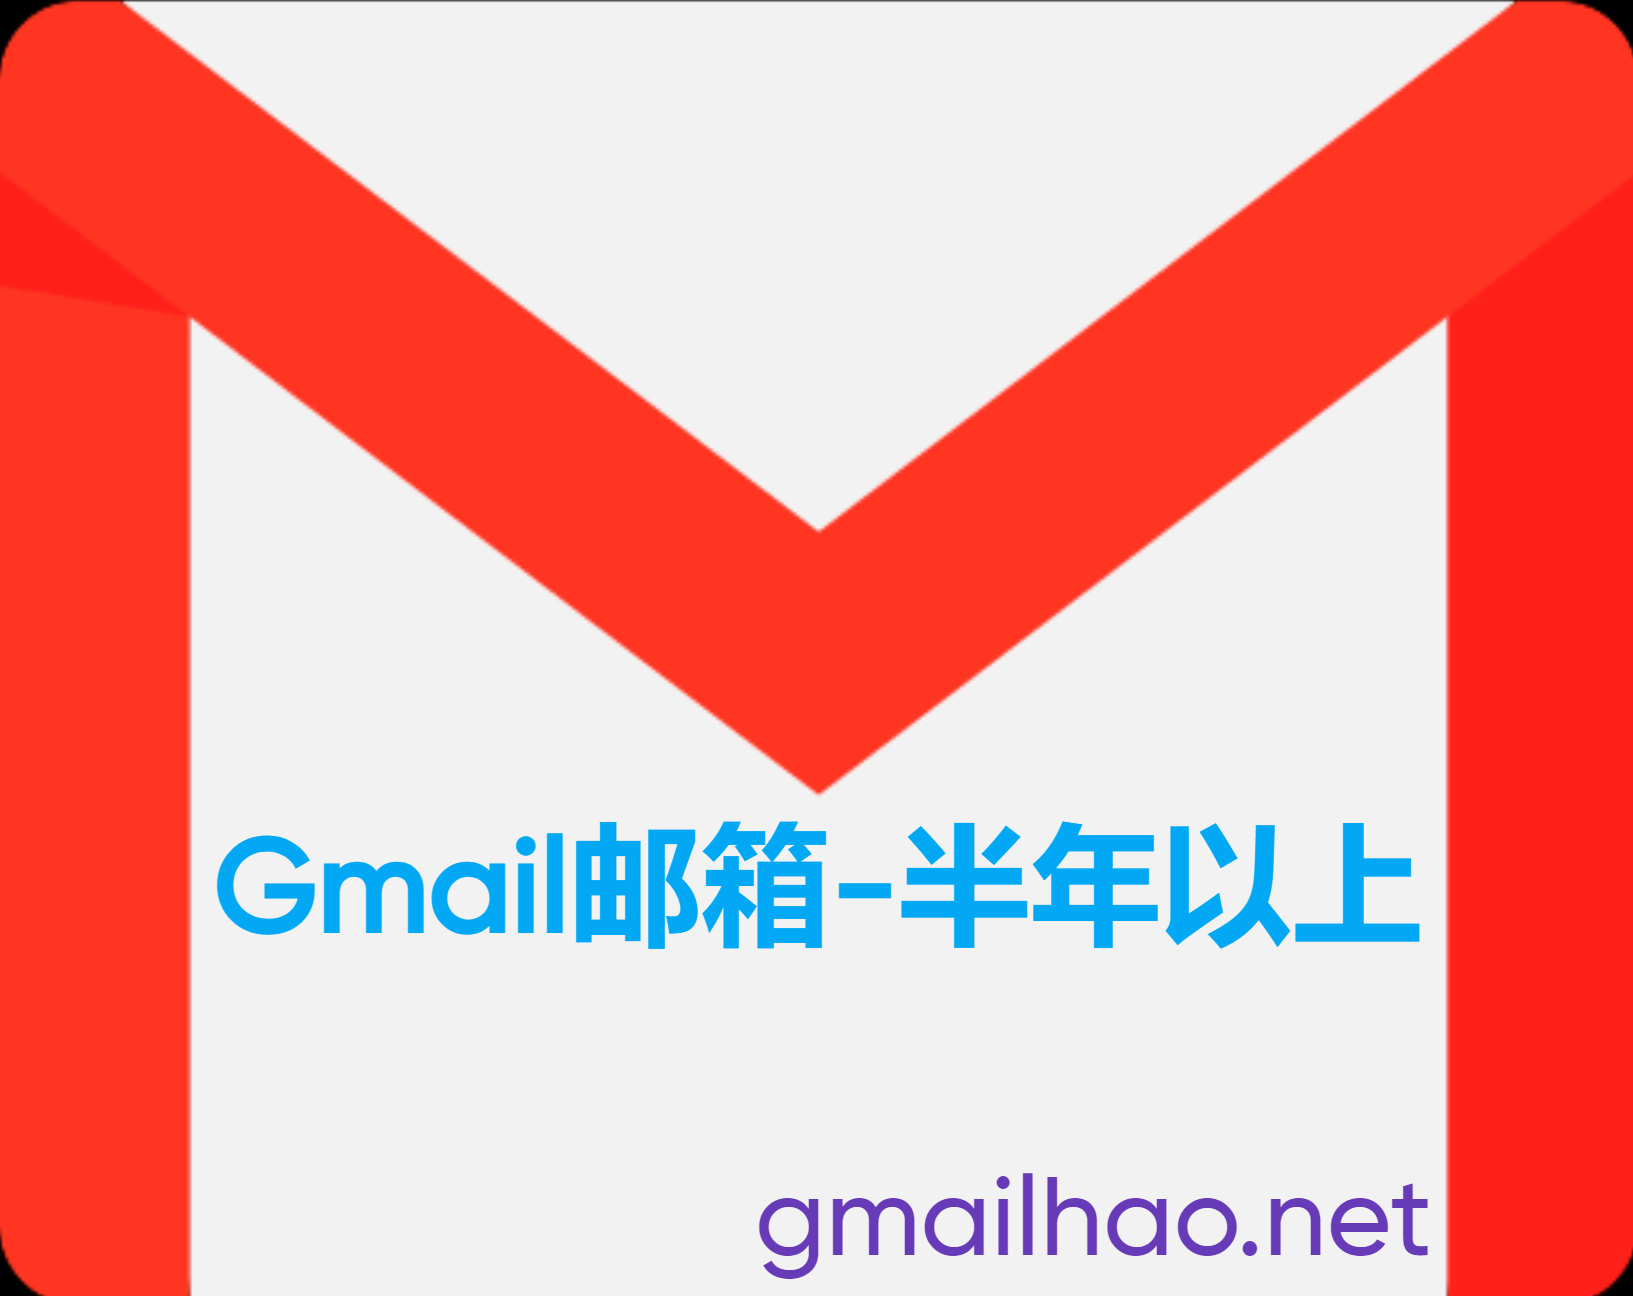 Gmail邮箱-3月以上